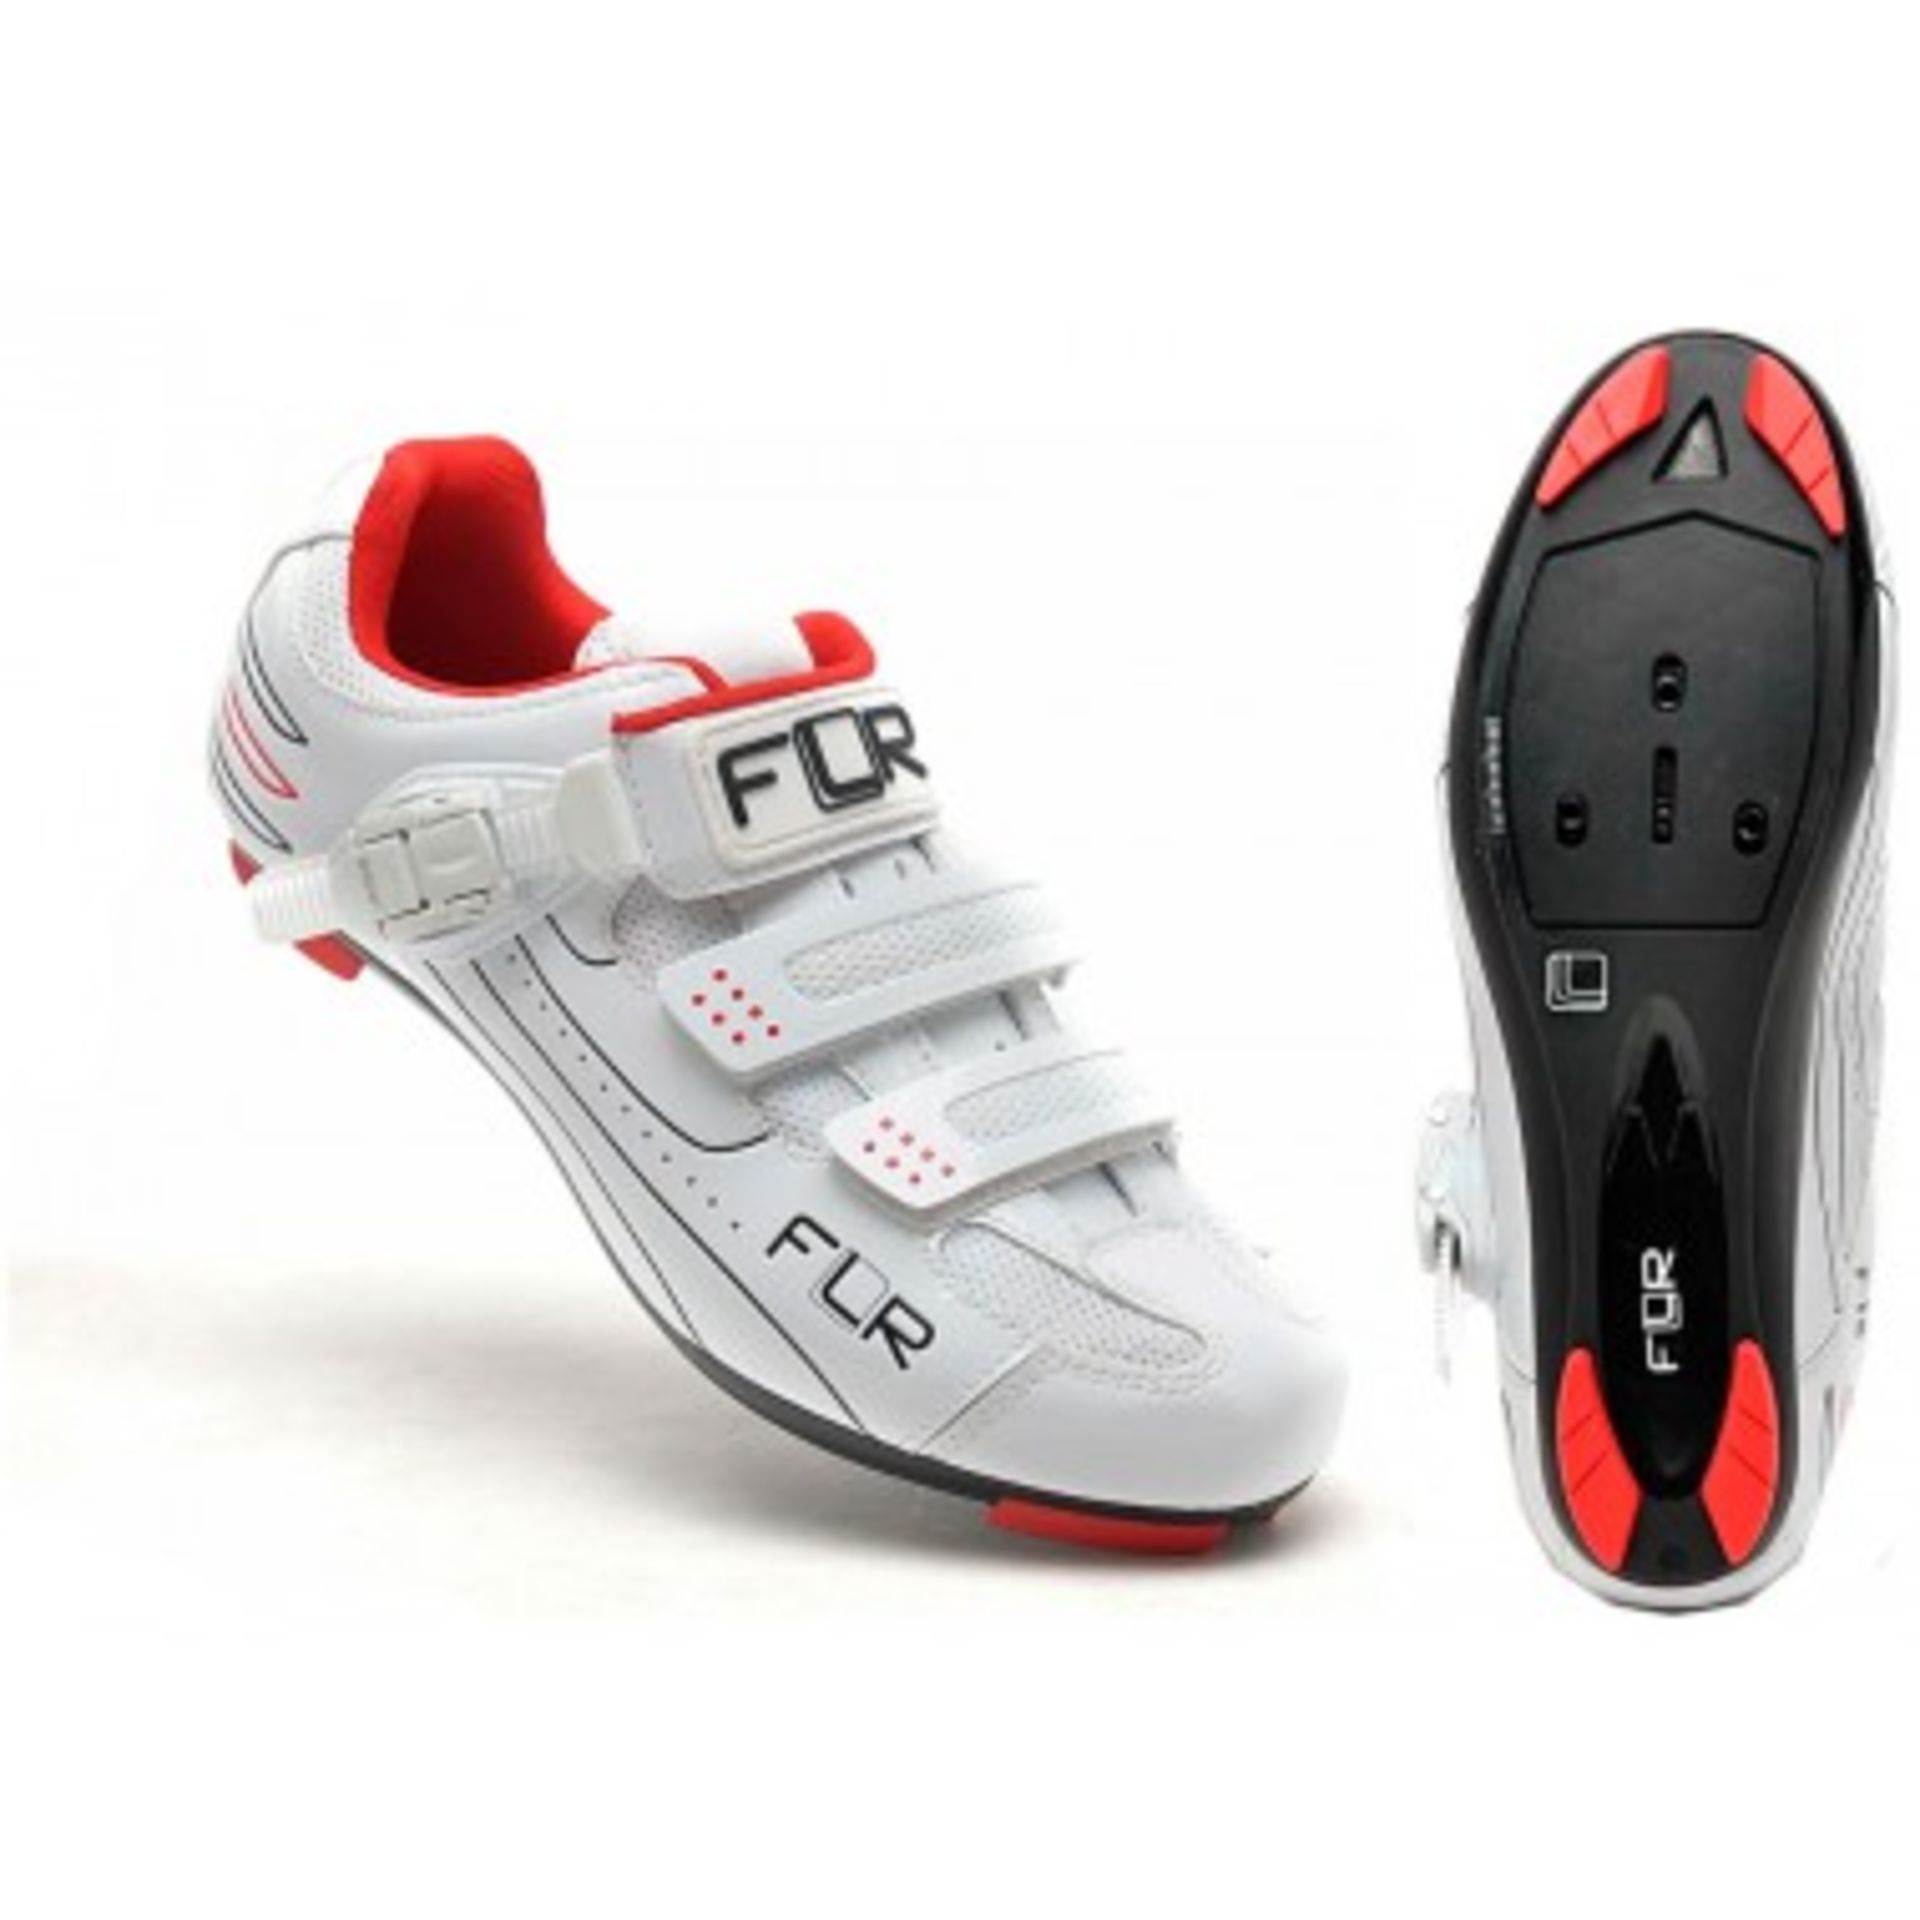 FLR F-15 II White Cycling Shoes UK10.5 RRP £79.99